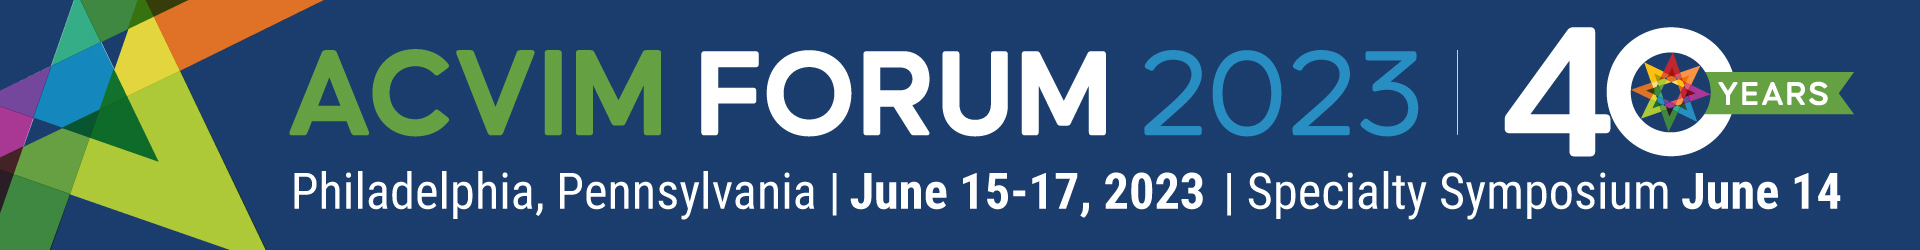 ACVIM Forum 2023 Event Banner